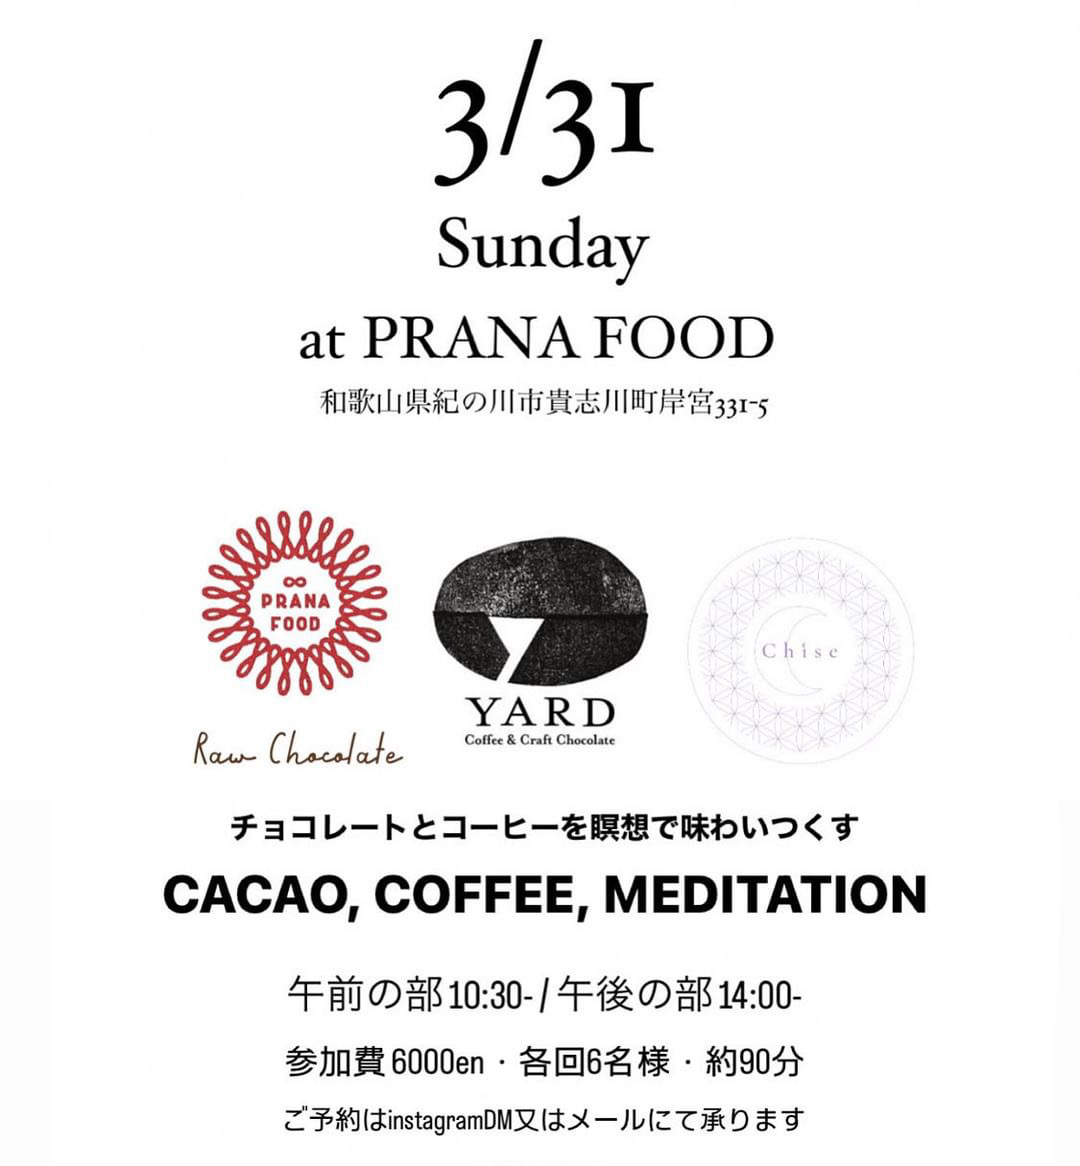 CACAO, COFFEE, MEDITATION